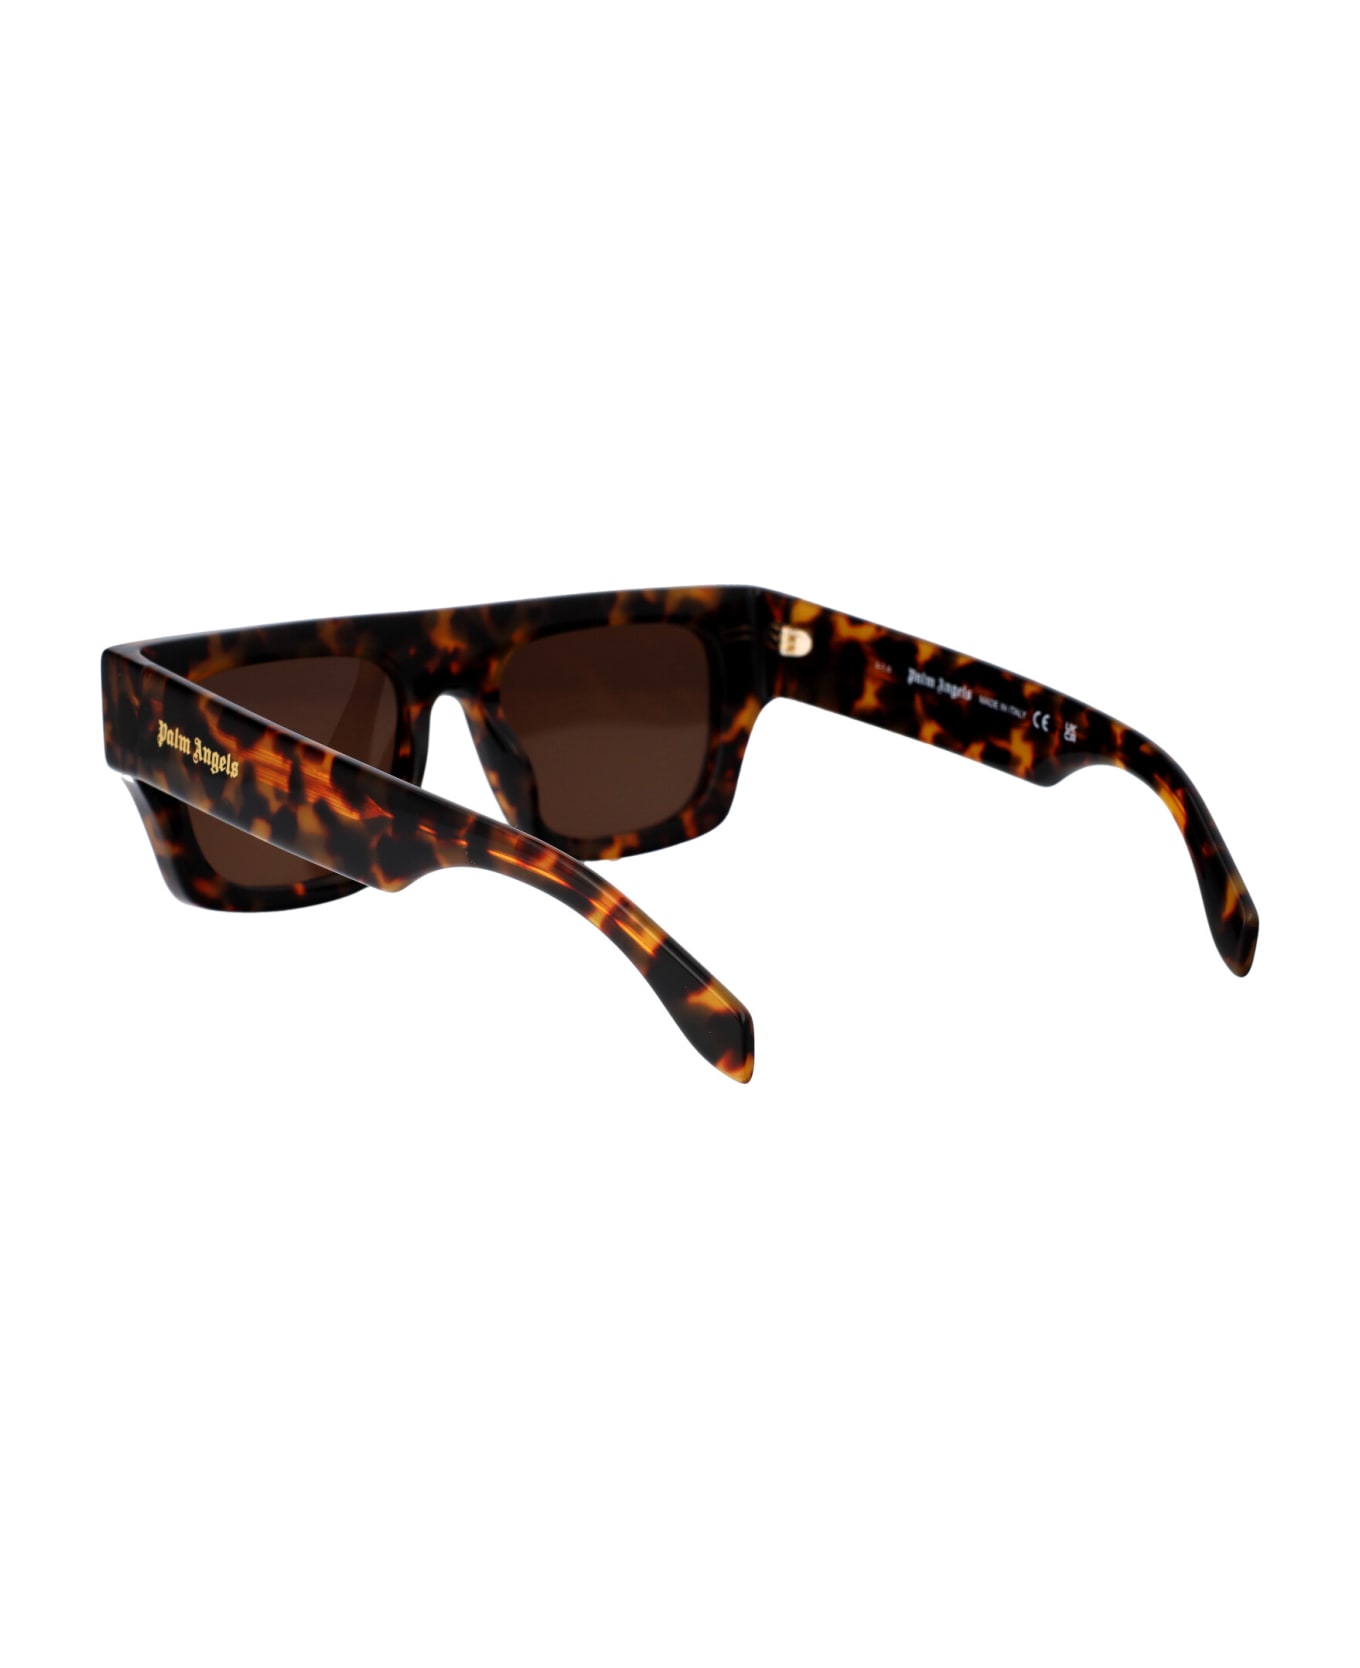 Palm Angels Salton Sunglasses - 6064 HAVANA